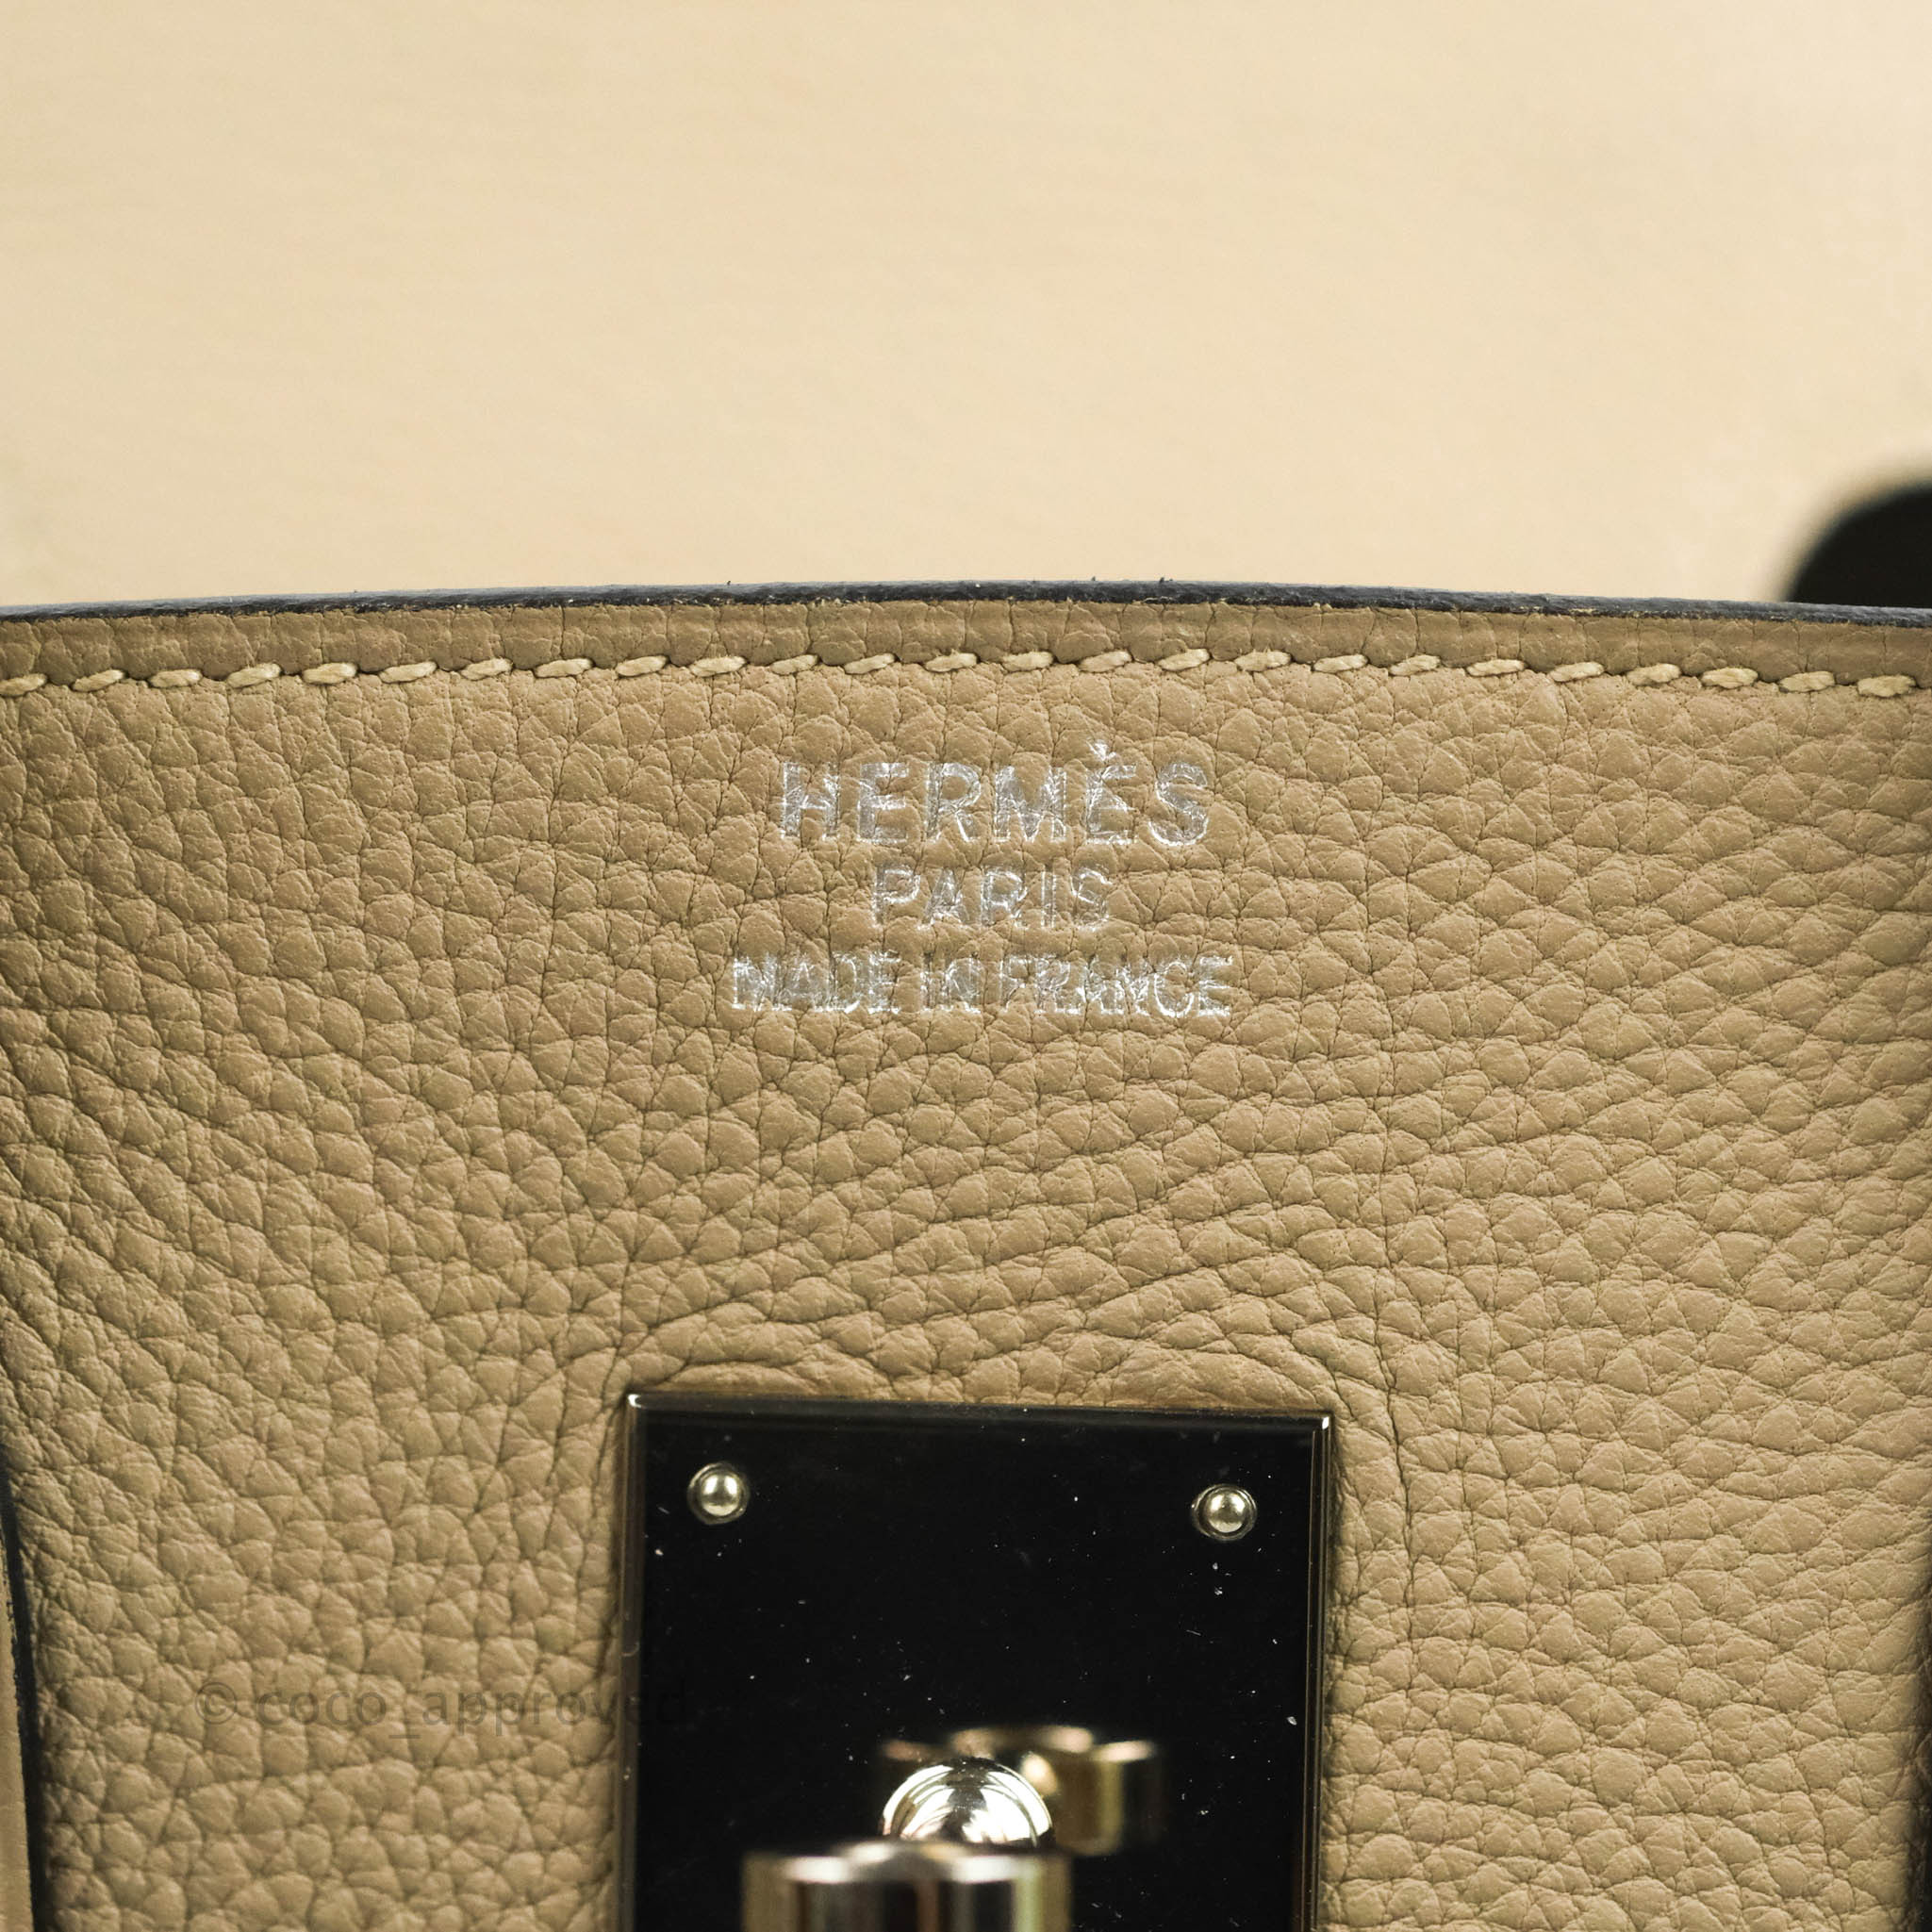 Hermès Gris Asphalte Togo Birkin 35cm Palladium Hardware, Hermès Handbags  Online, Jewellery